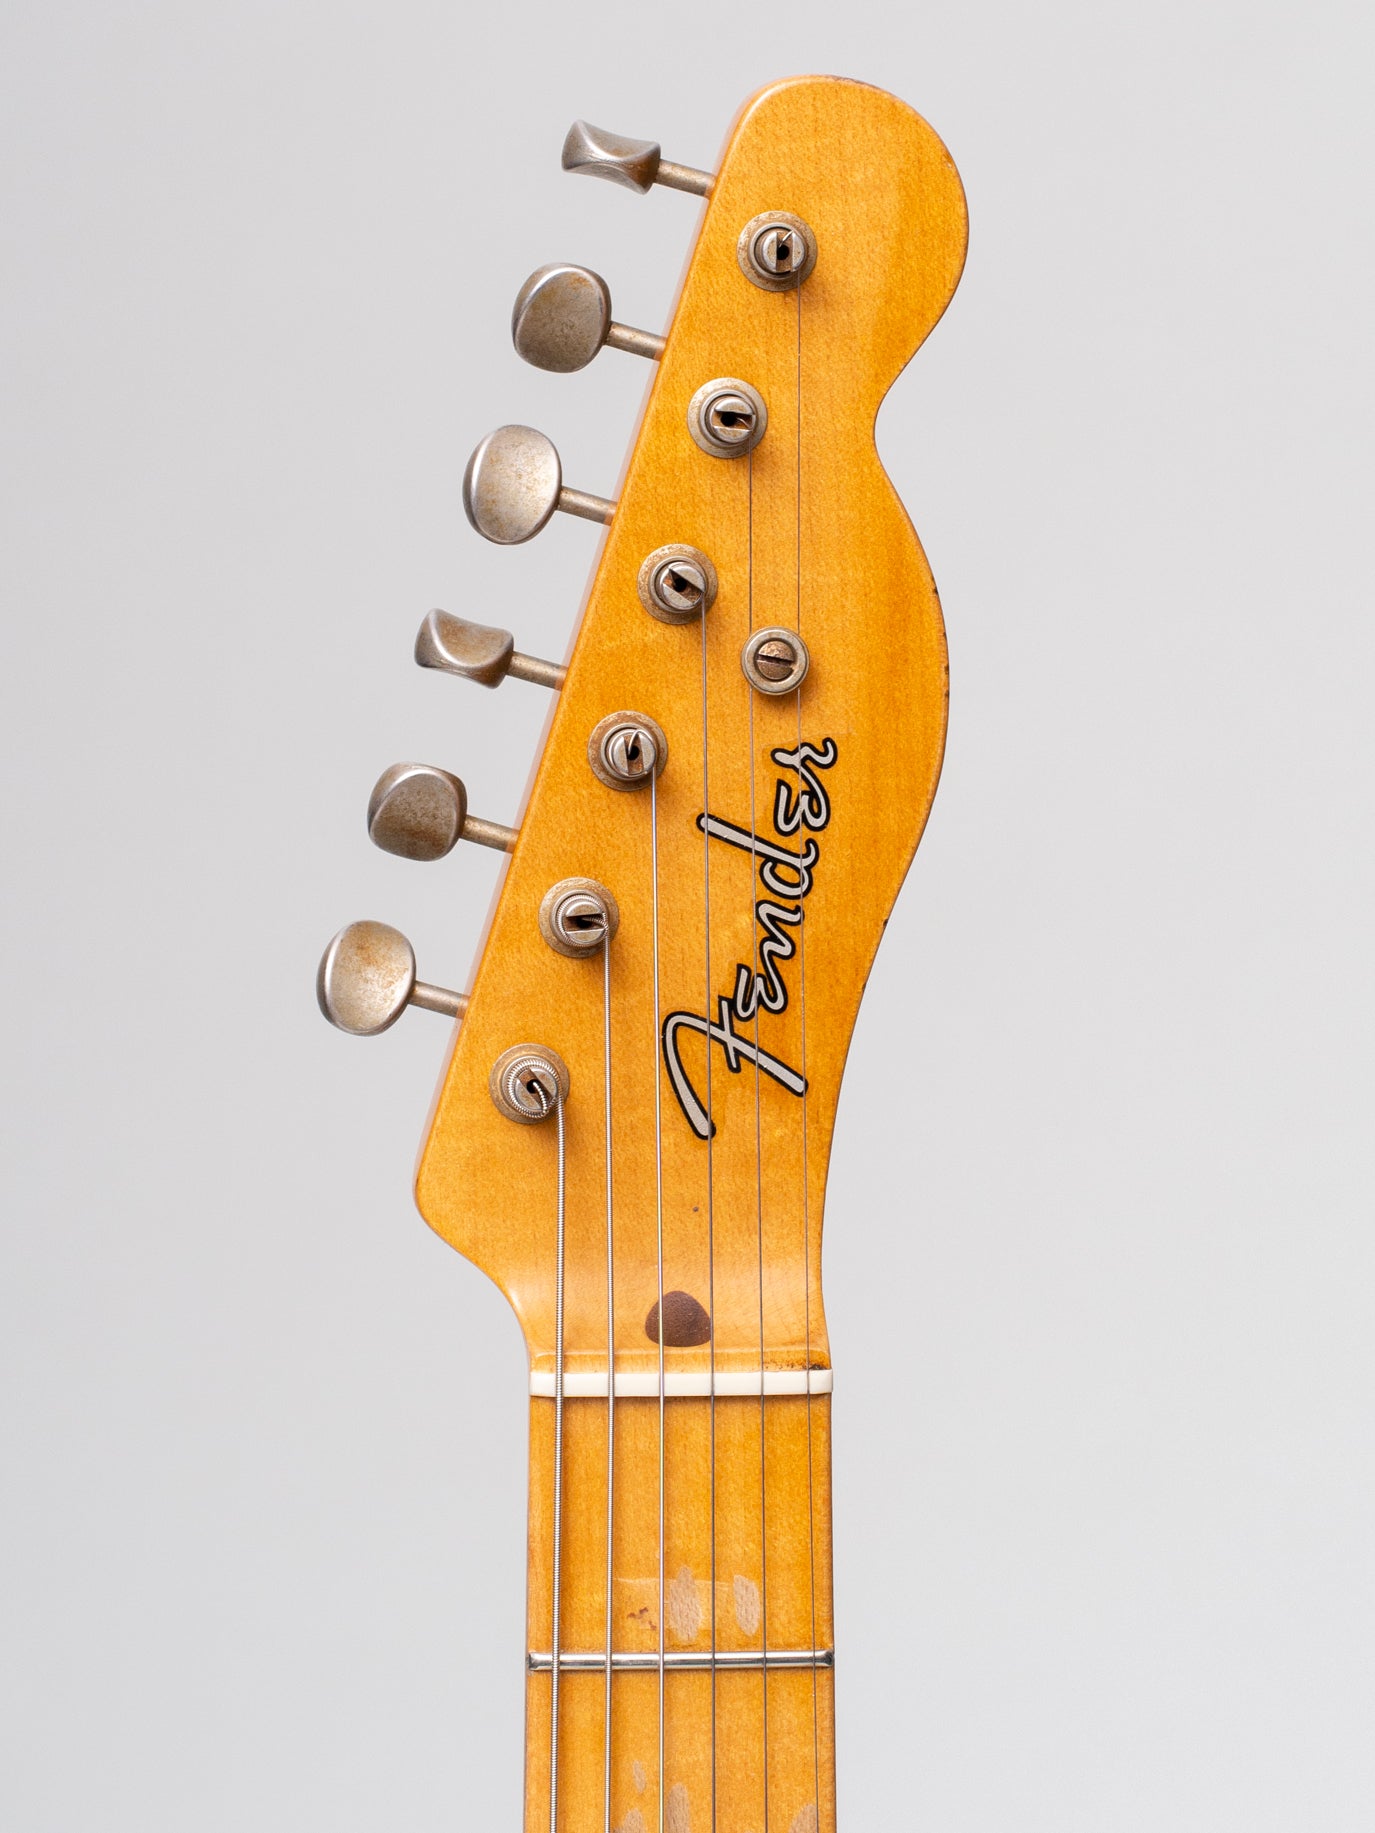 2019 Fender Custom Shop Nocaster